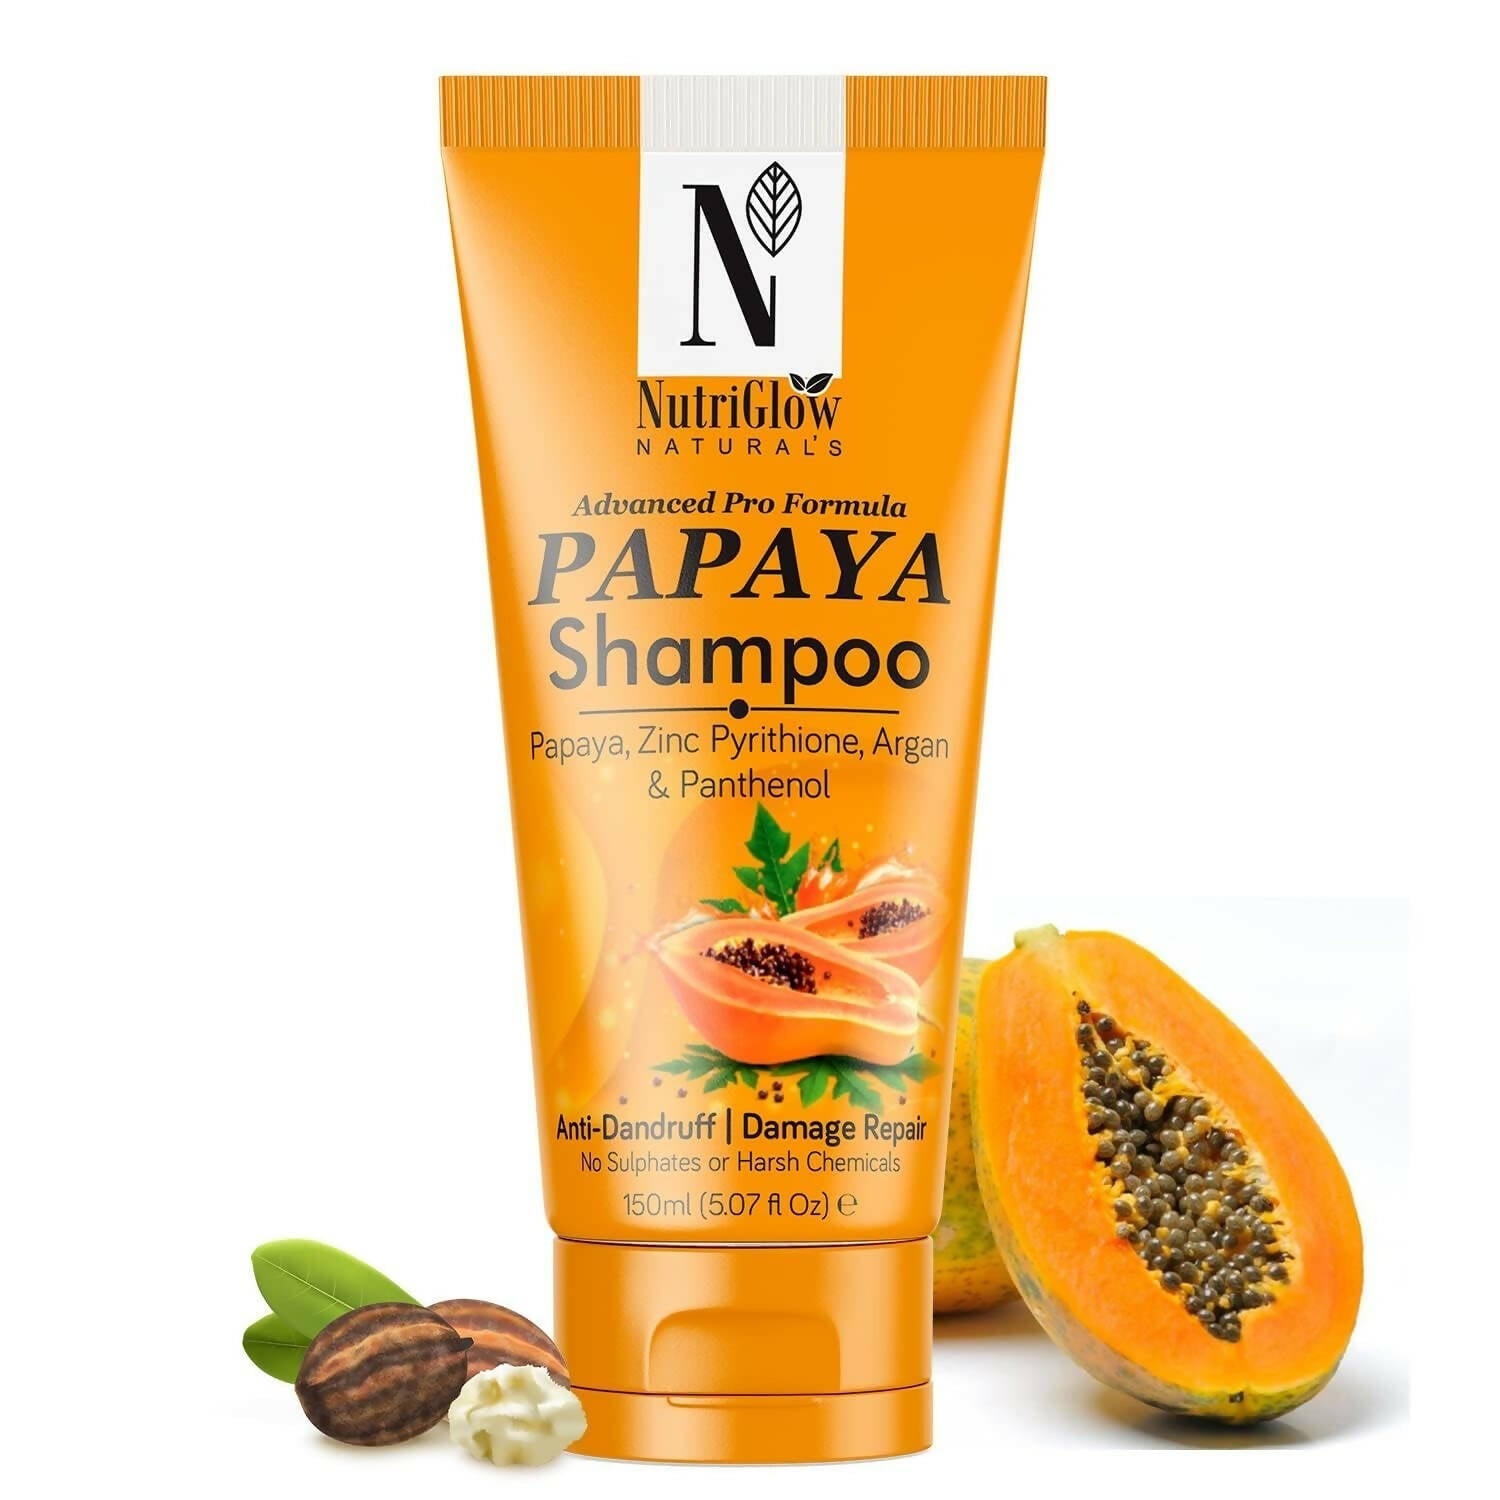 NutriGlow NATURAL'S Advanced Pro Formula Papaya Shampoo - BUDEN